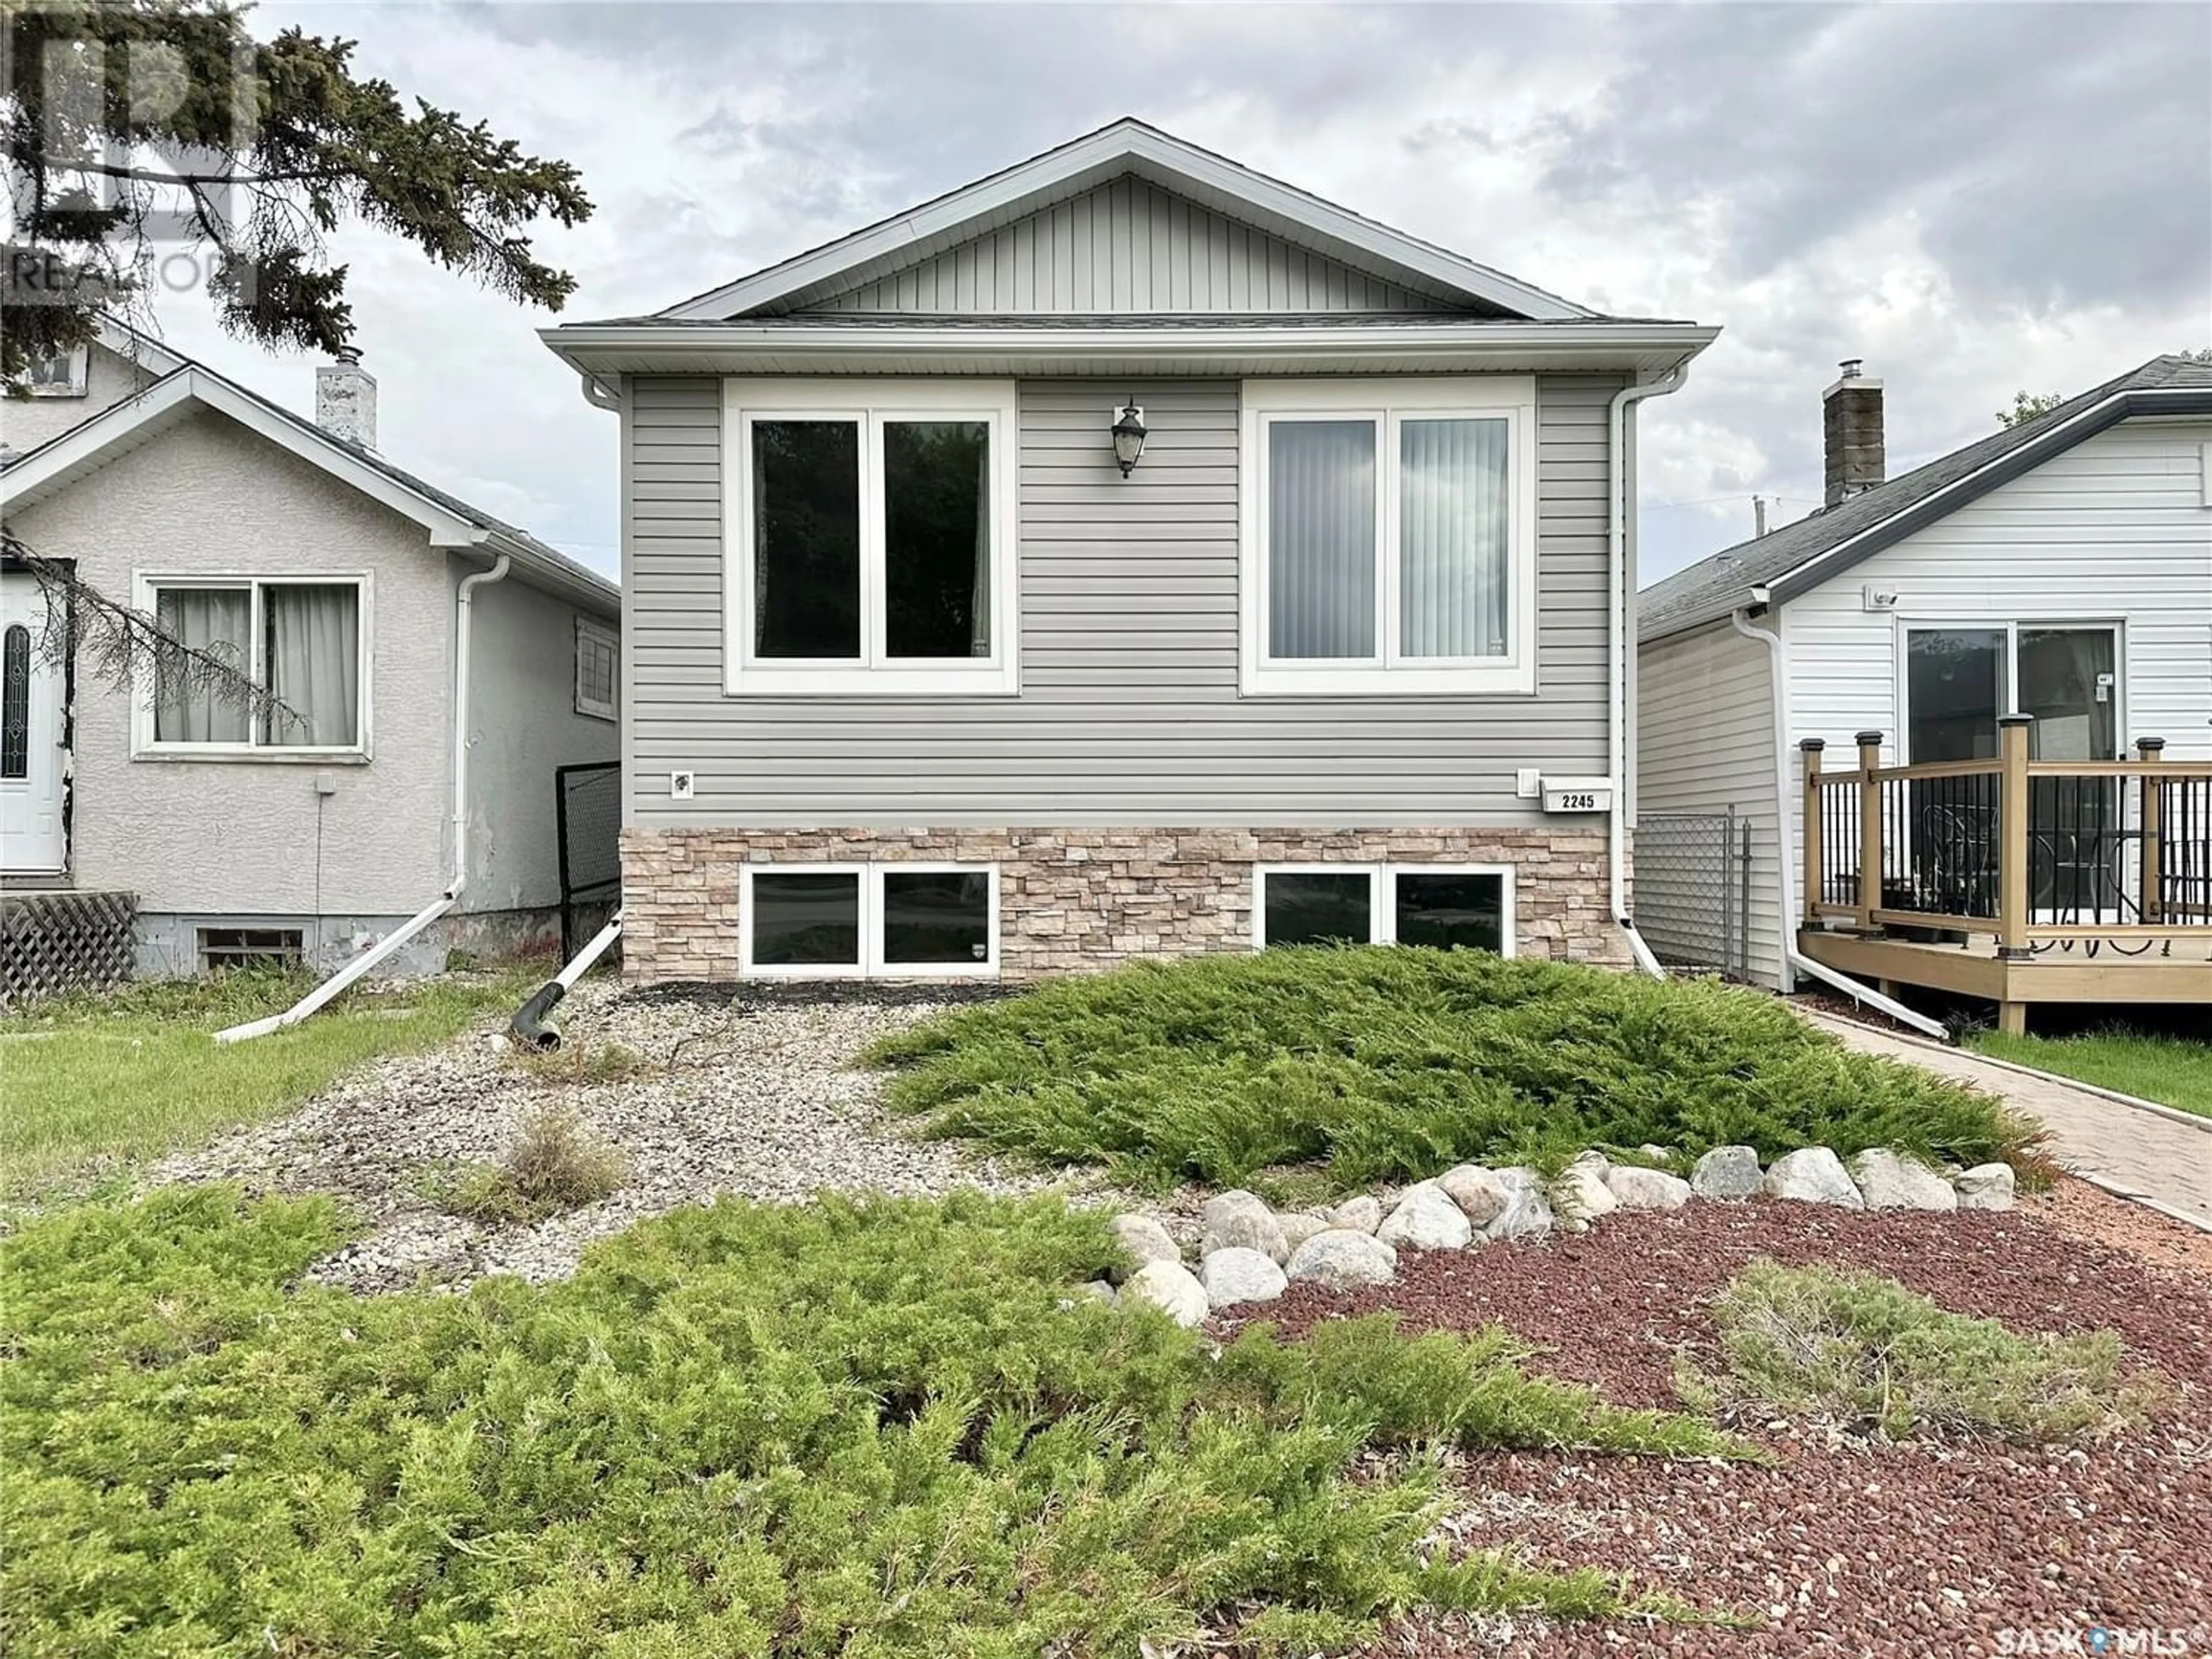 Home with vinyl exterior material for 2245 McDonald STREET, Regina Saskatchewan S4N2Y9